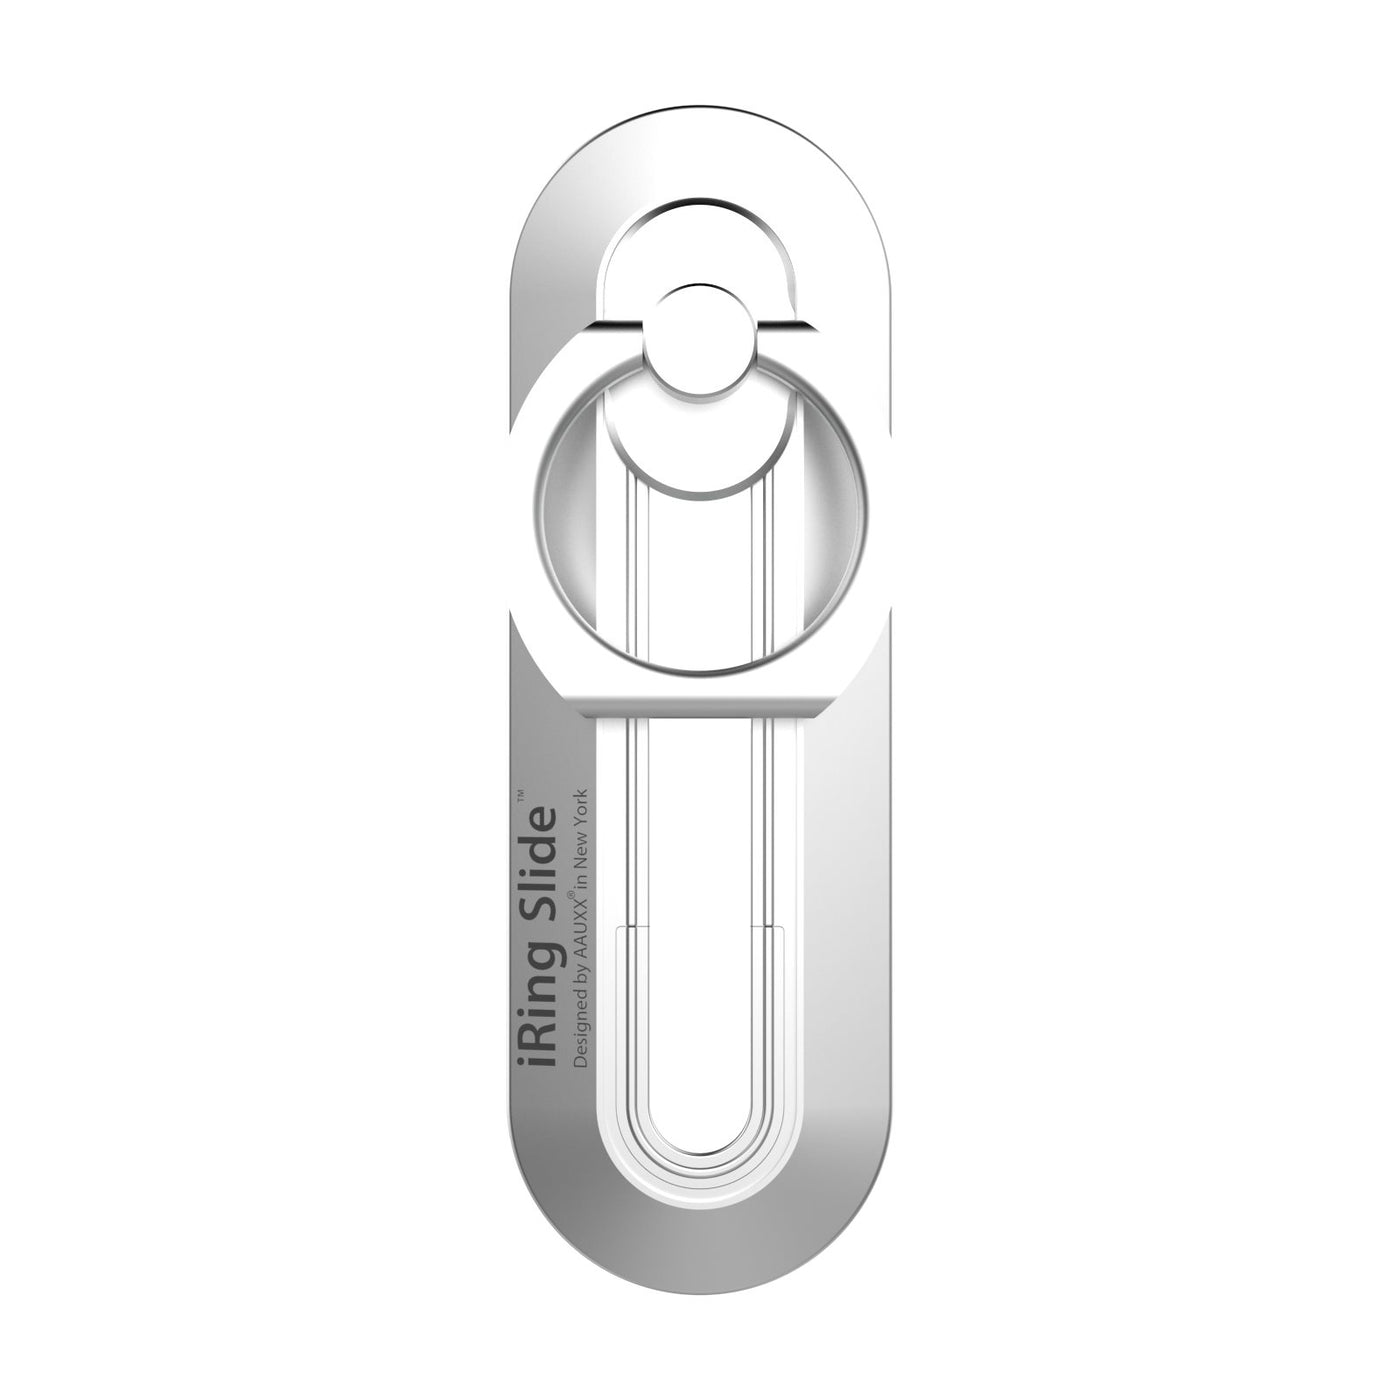 iRing Slide Phone Holder - Universal